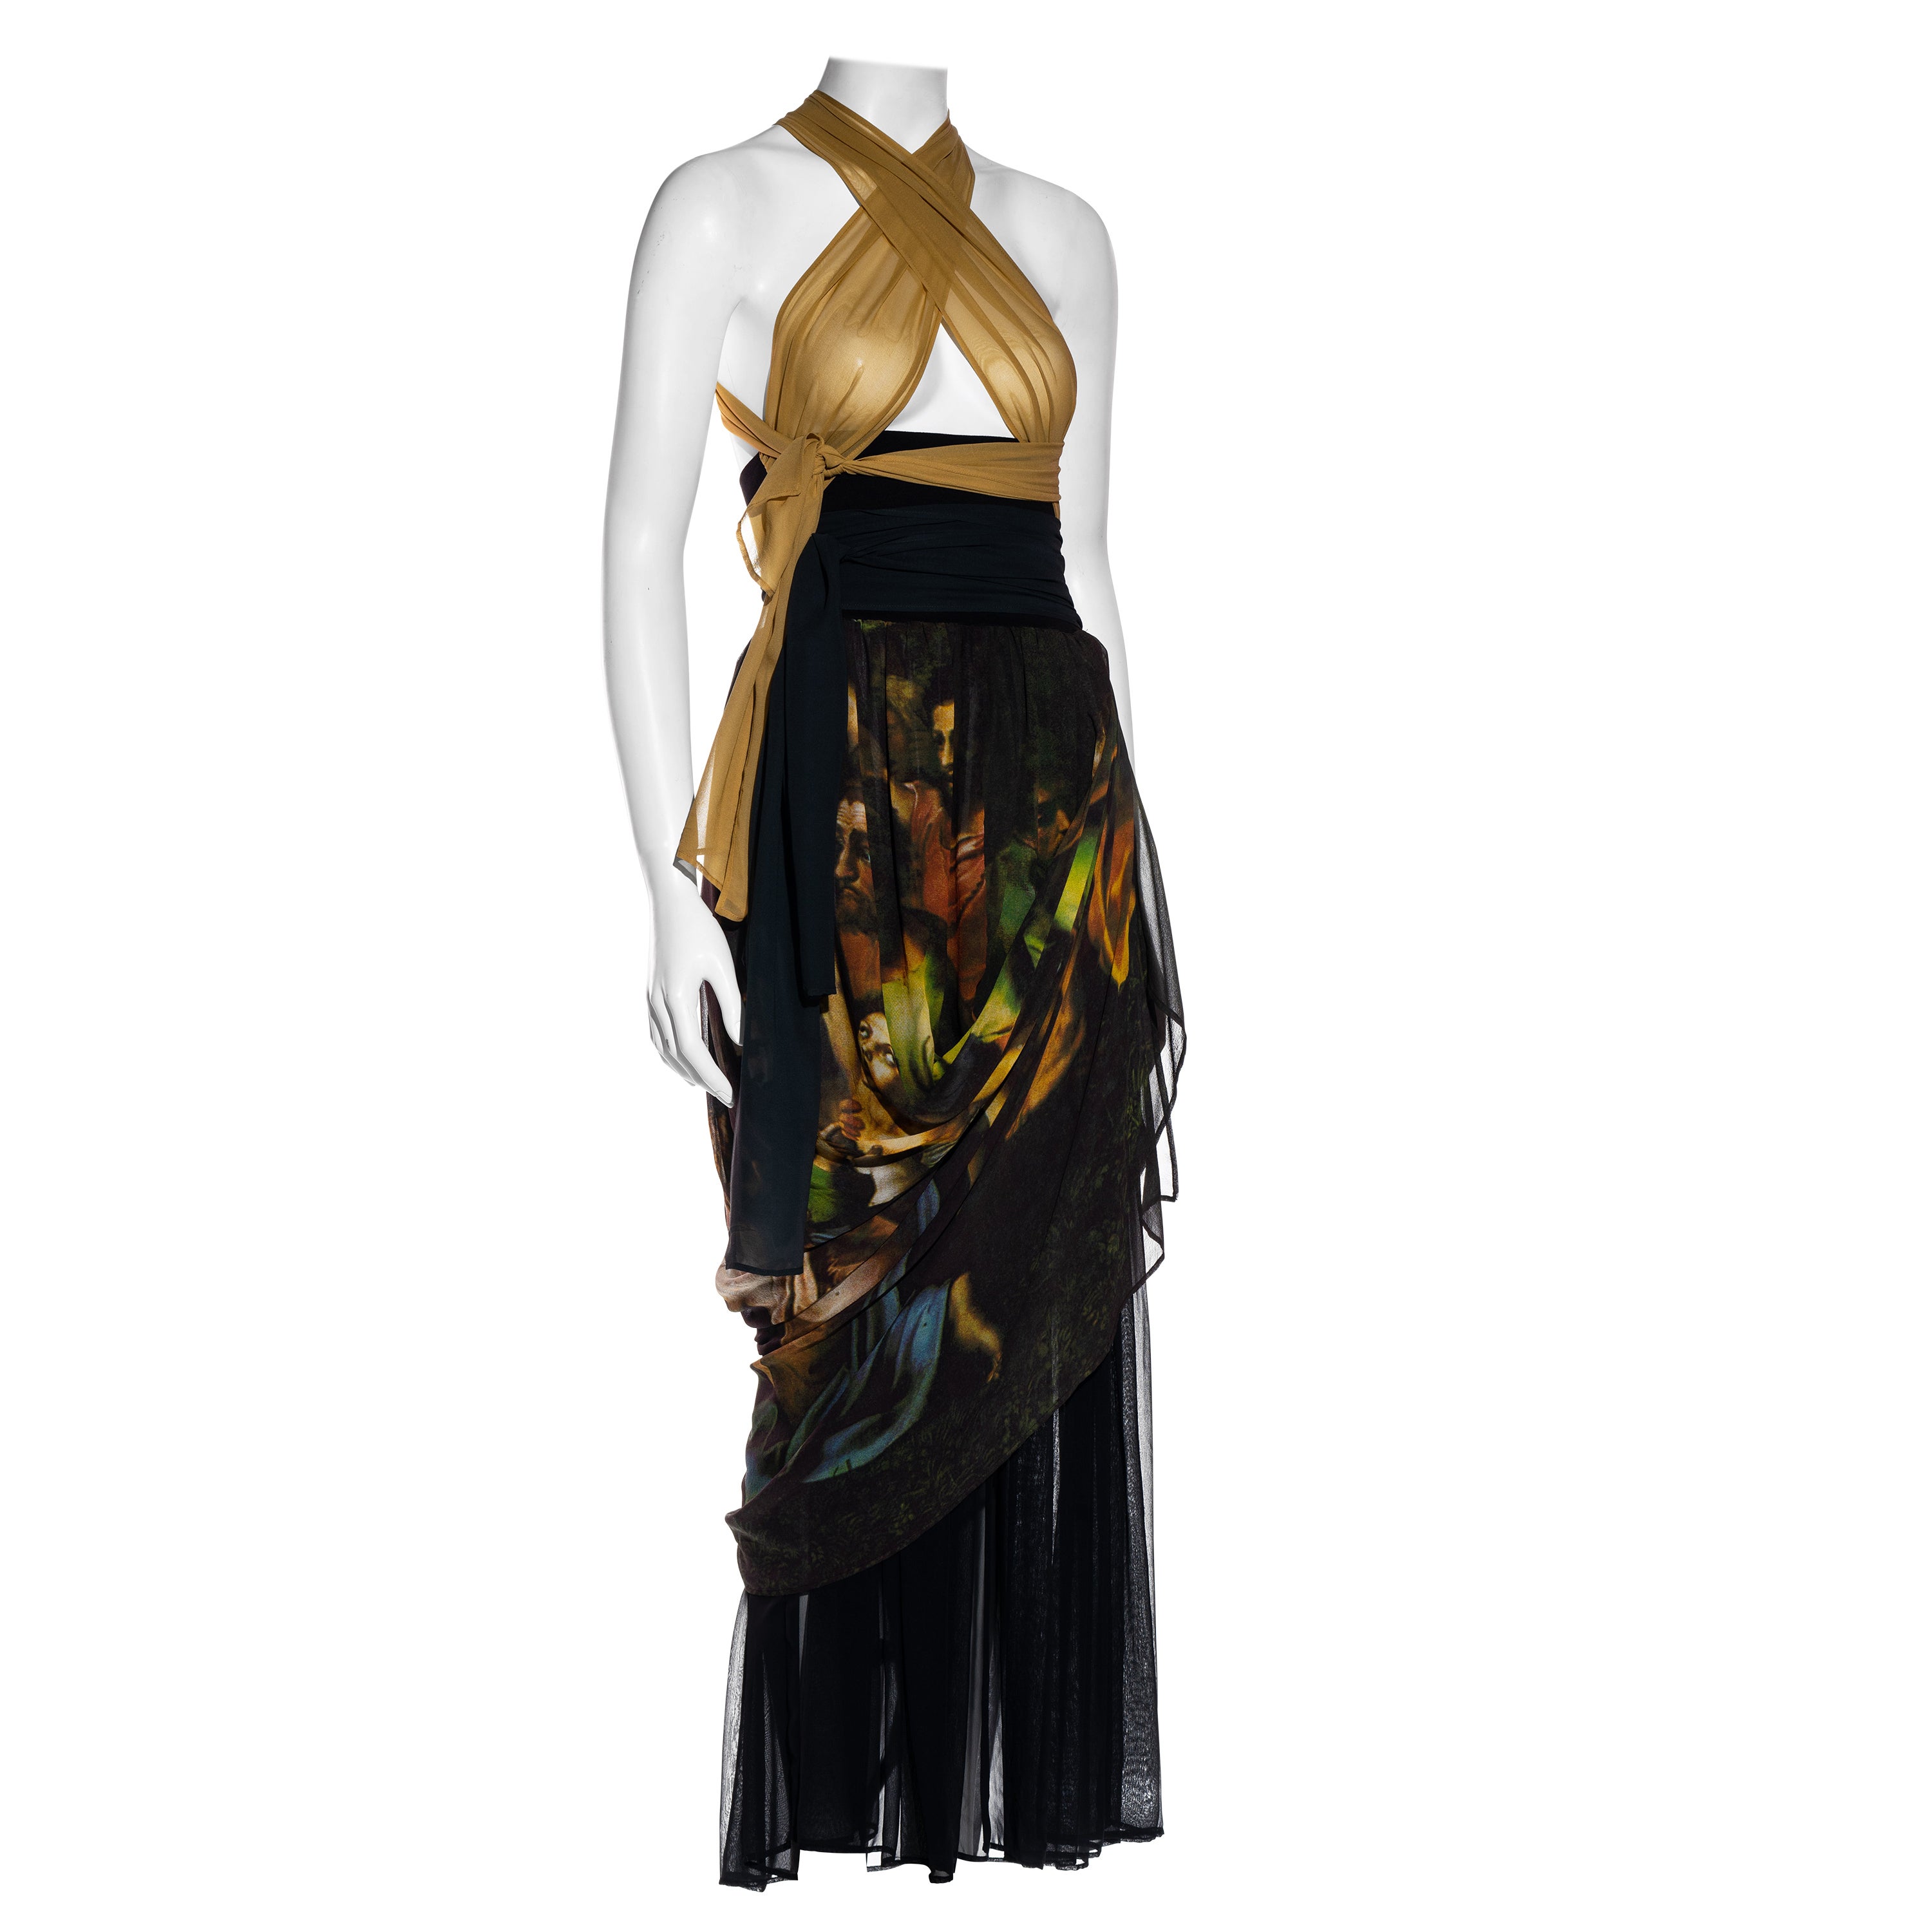 Dolce & Gabbana Renaissance printed silk dress with draped skirt, ss 1990